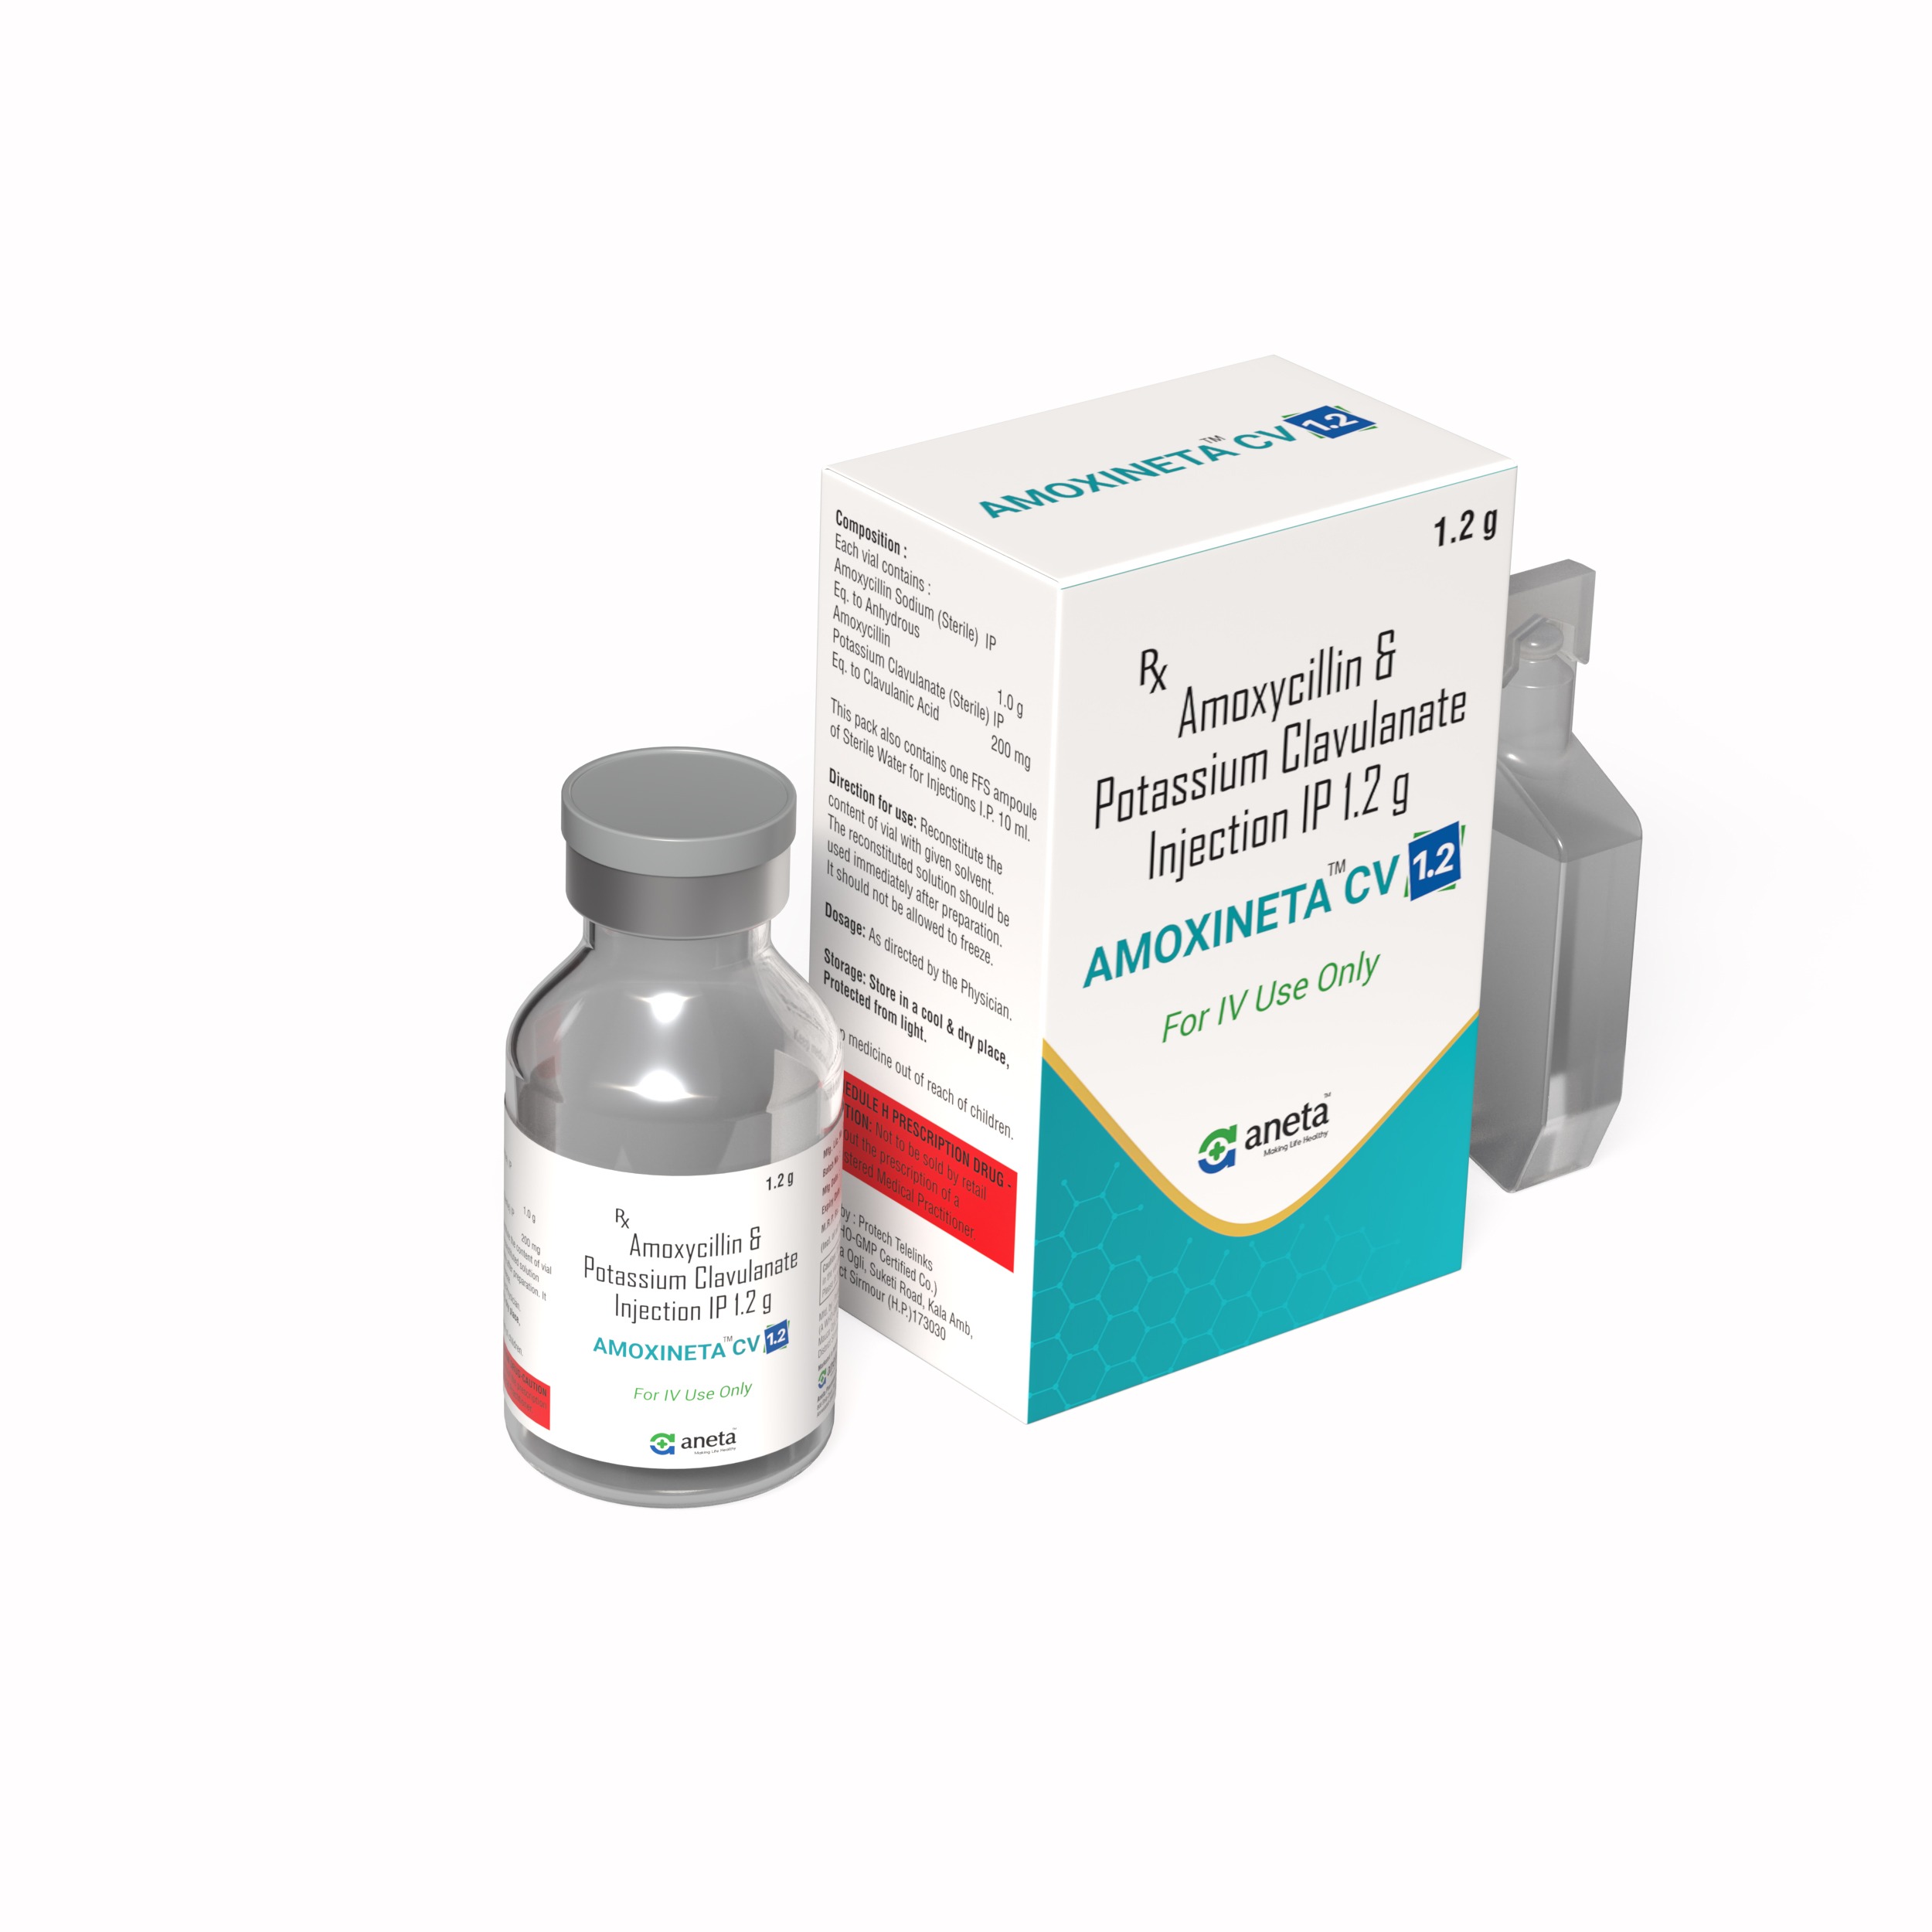 AMOXINETA CV 1.2